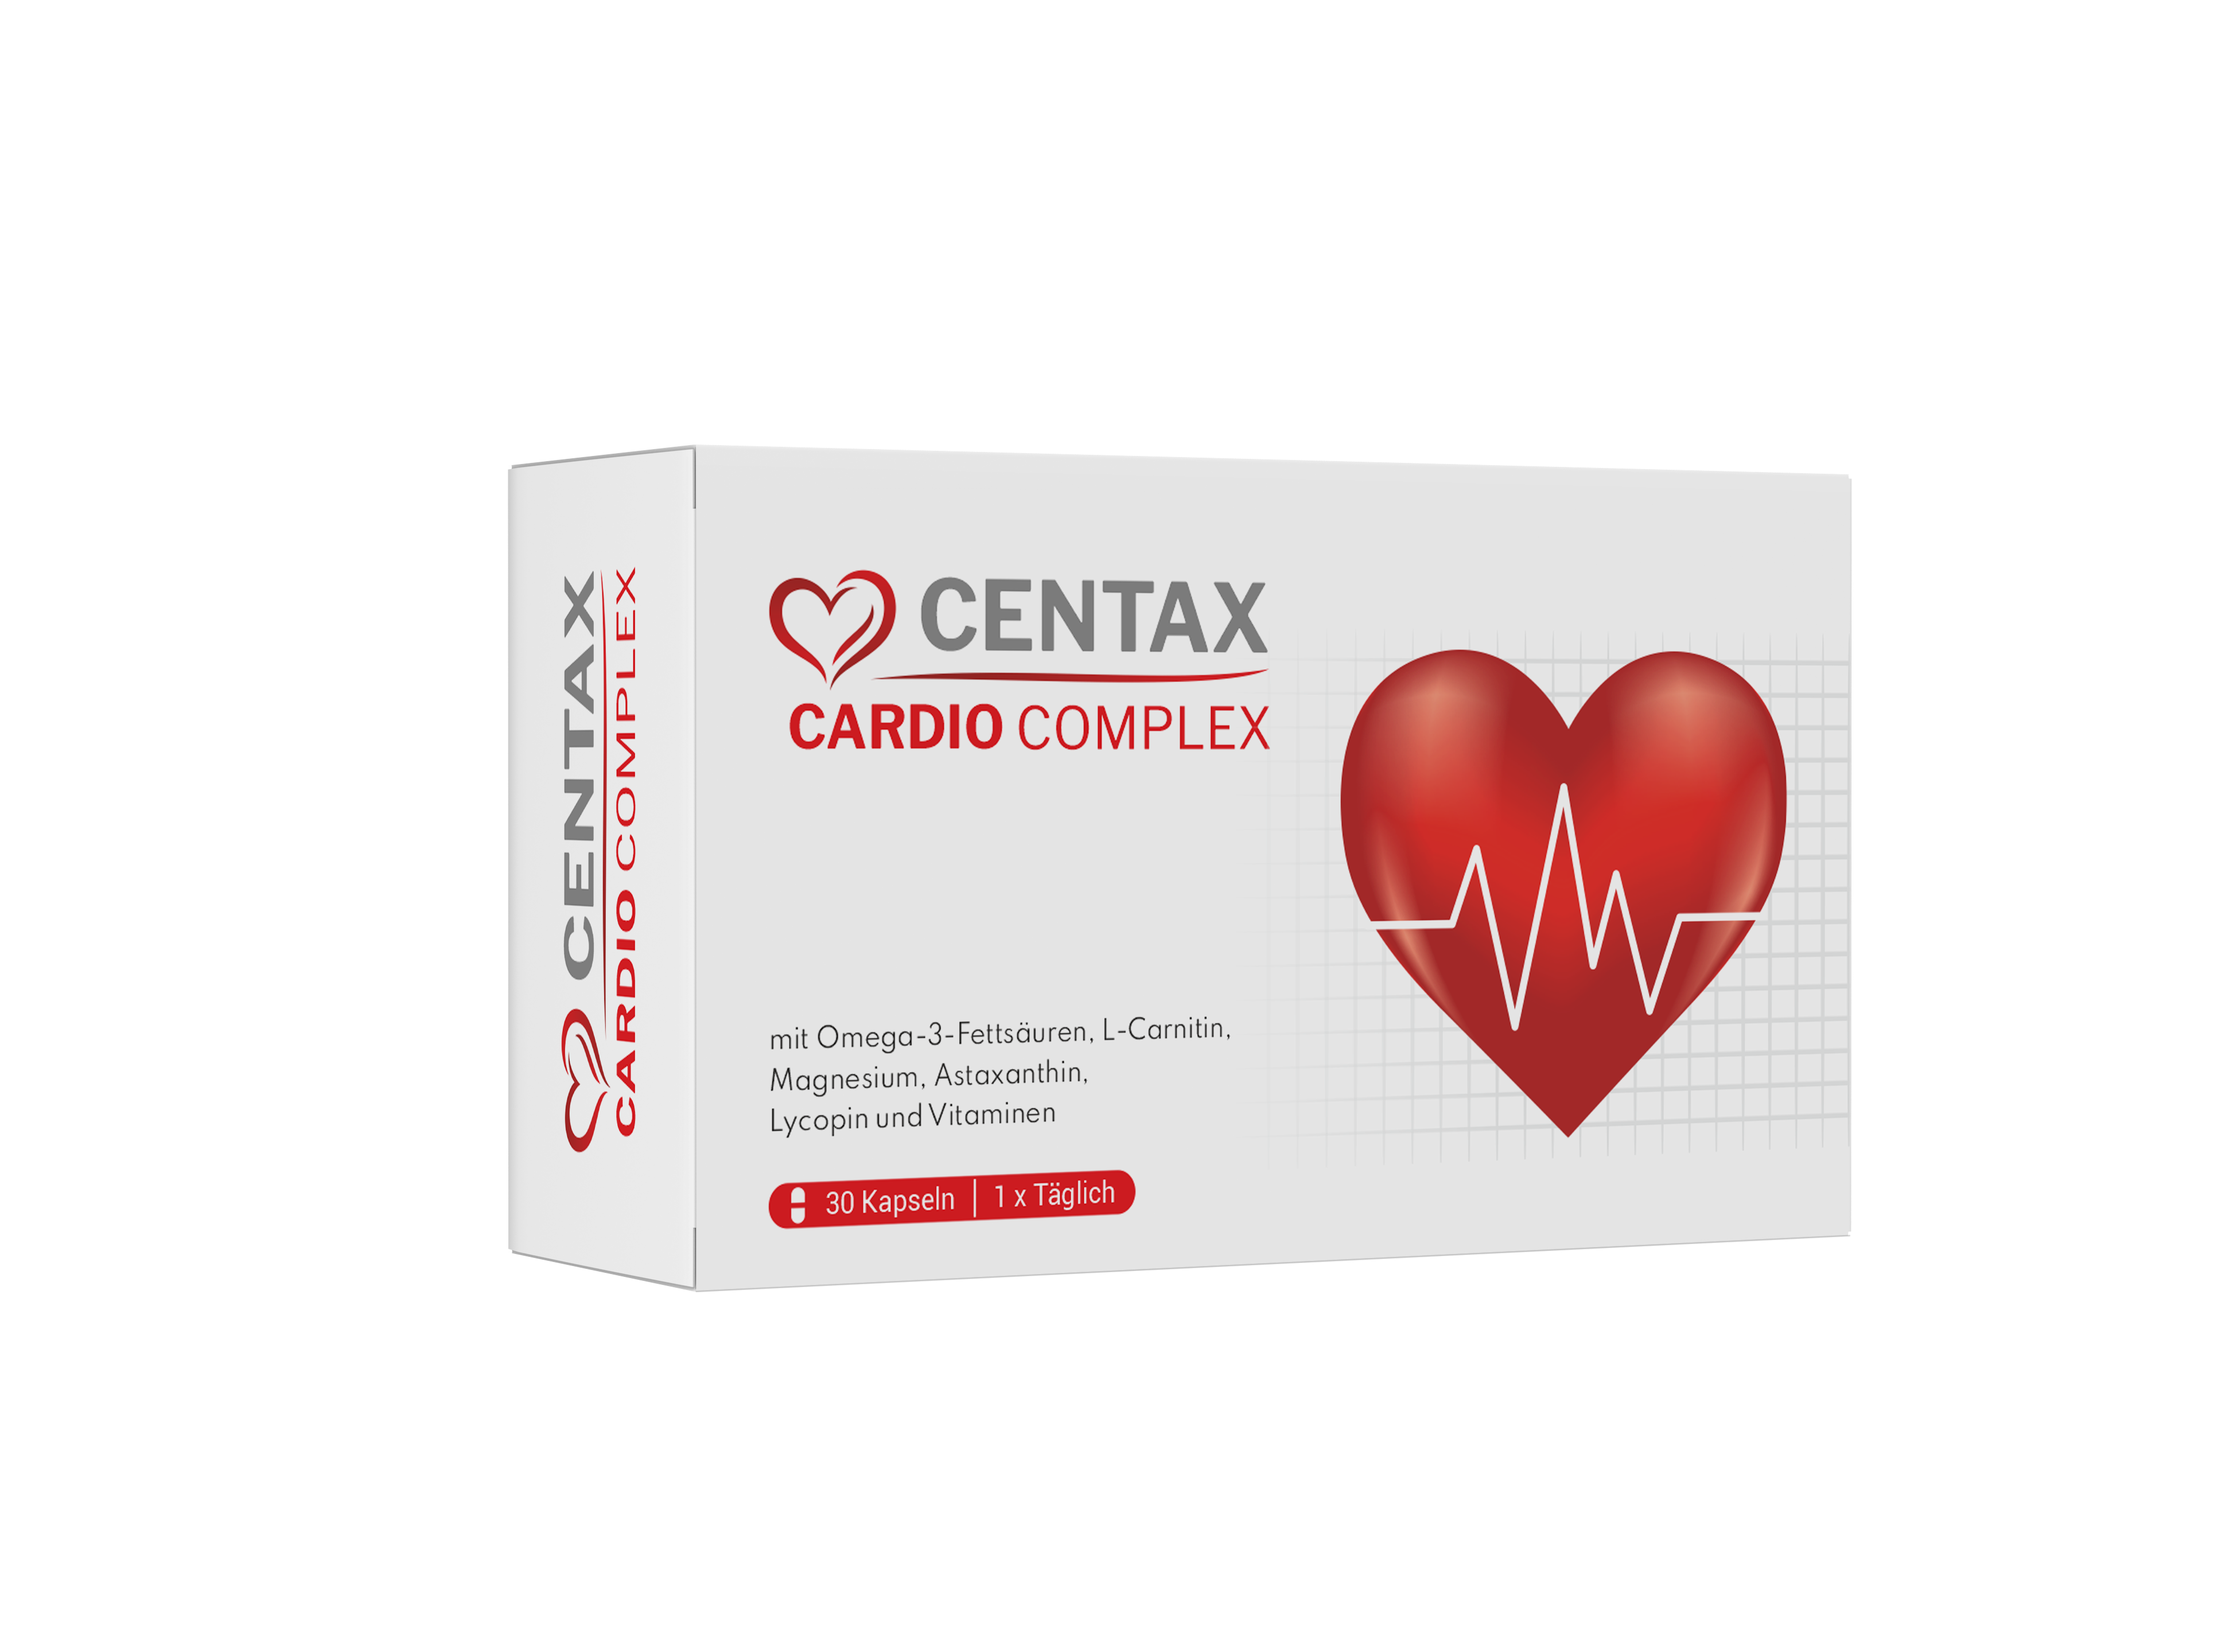 Centax Cardio Complex